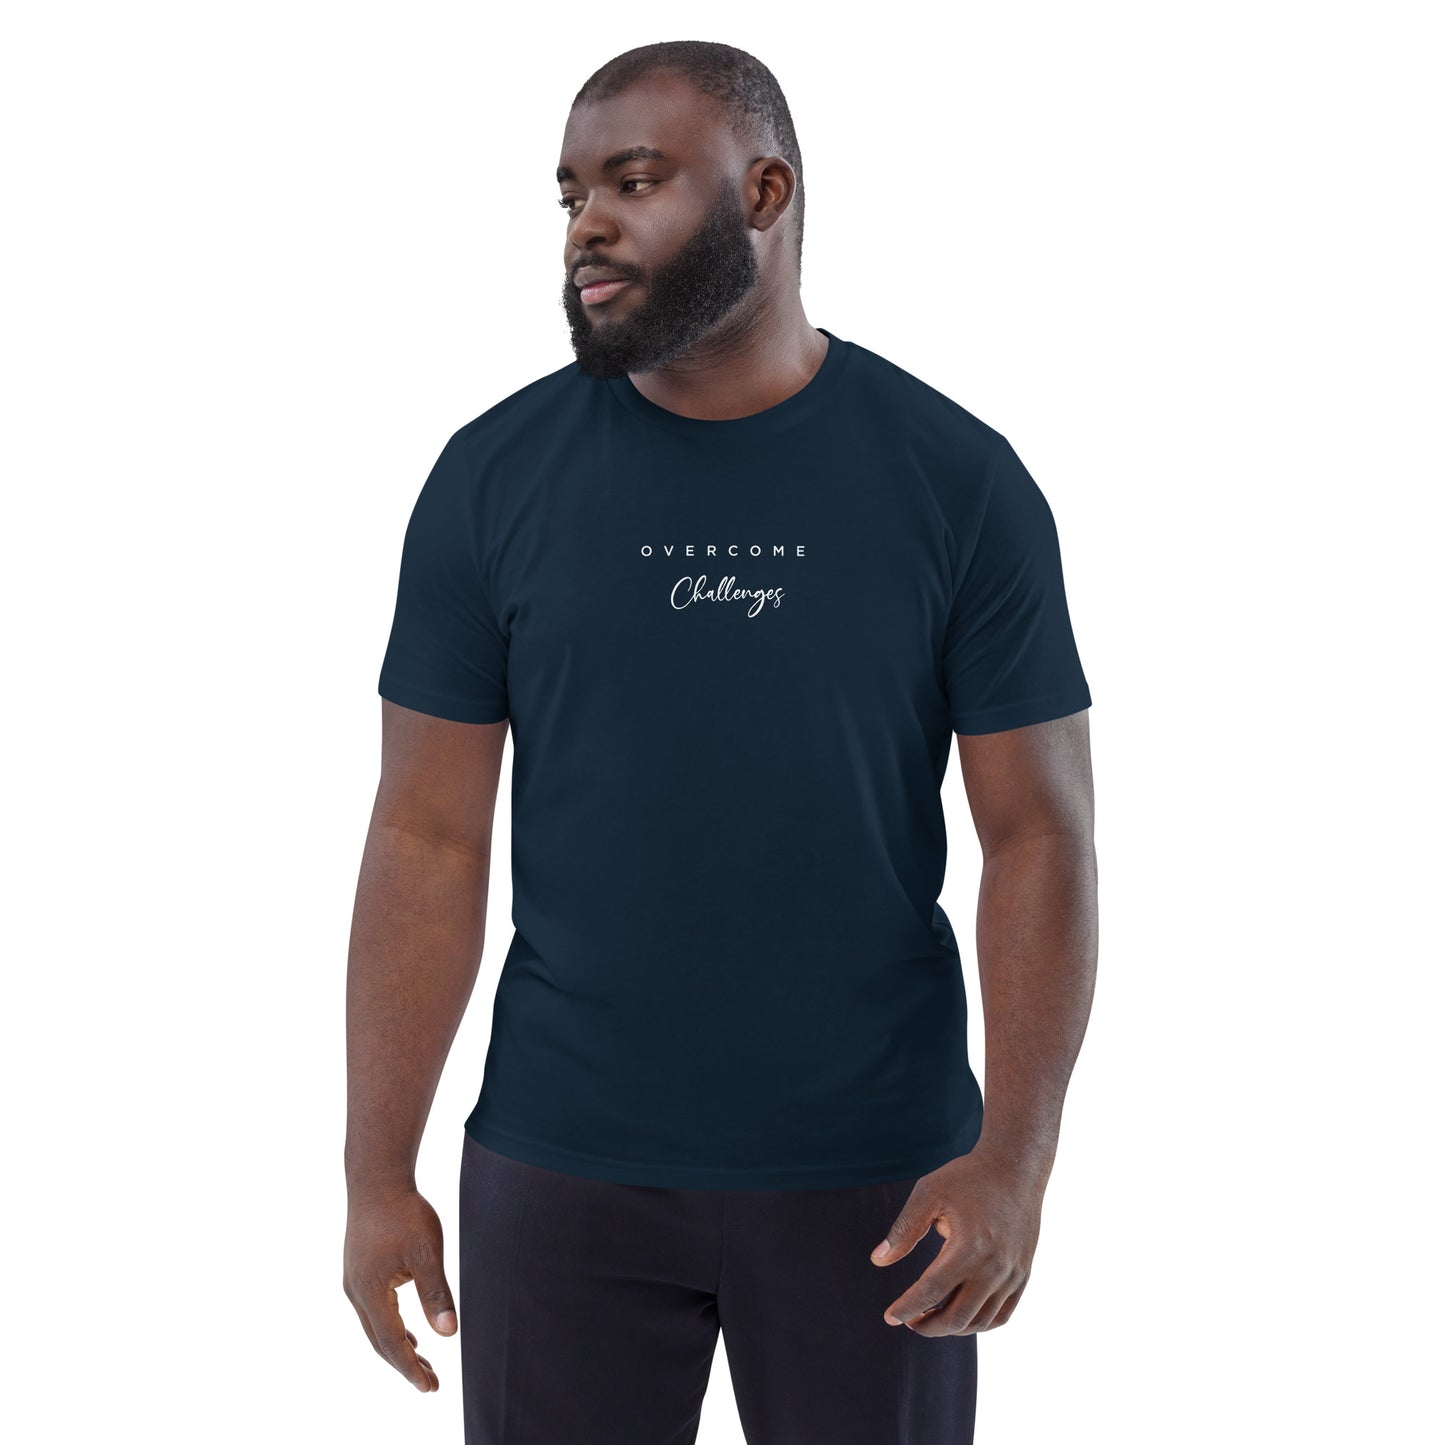 Overcome Challenges Men's 100% Organic Cotton T-Shirt